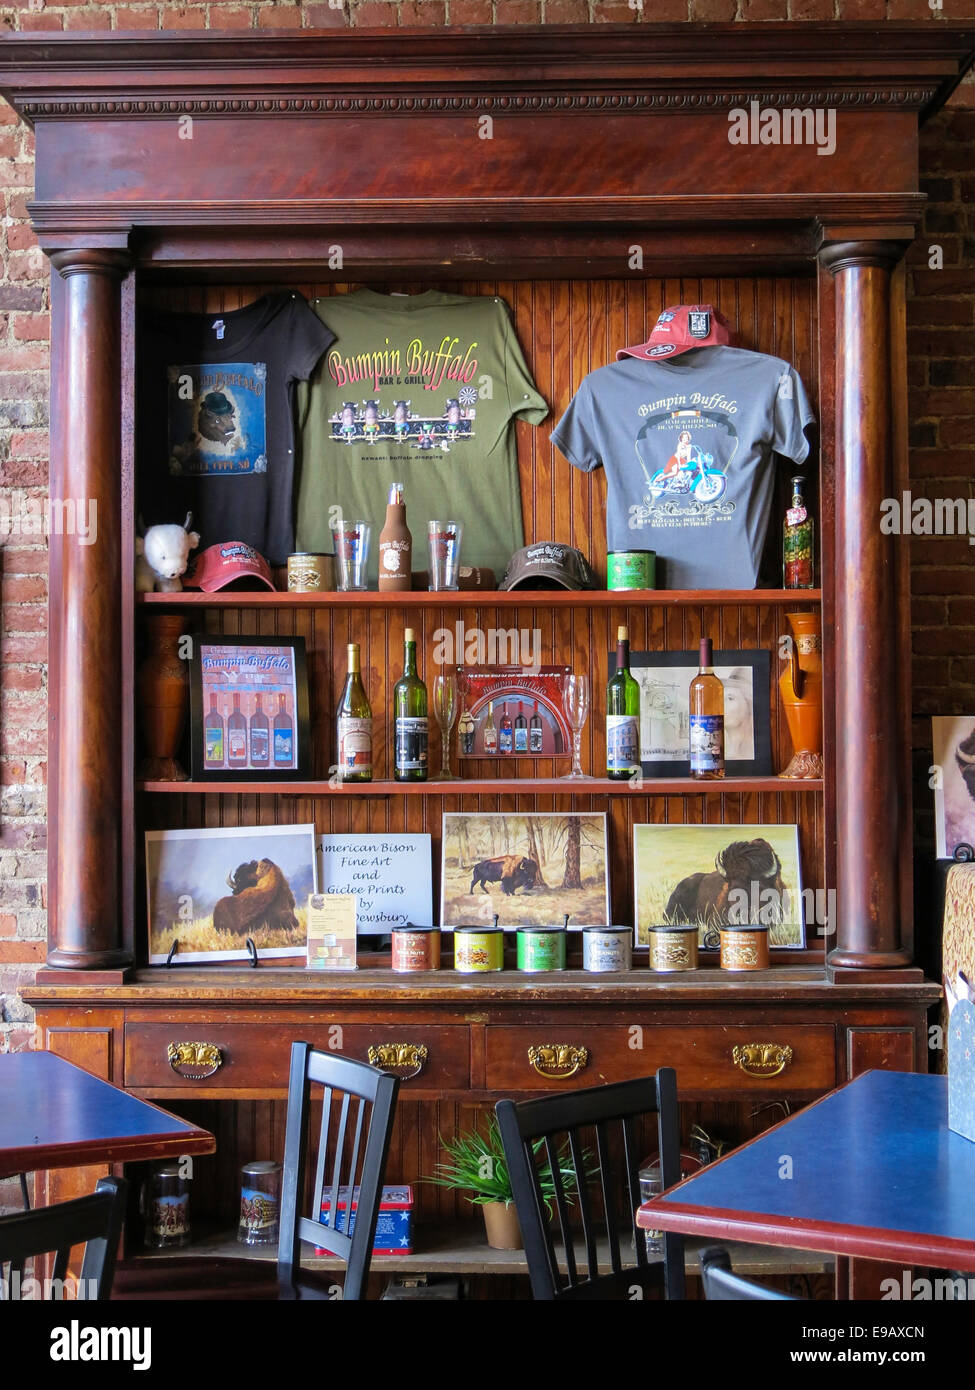 Bumpin' Buffalo Bar & Grill, Hill City, SD, USA Stock Photo - Alamy